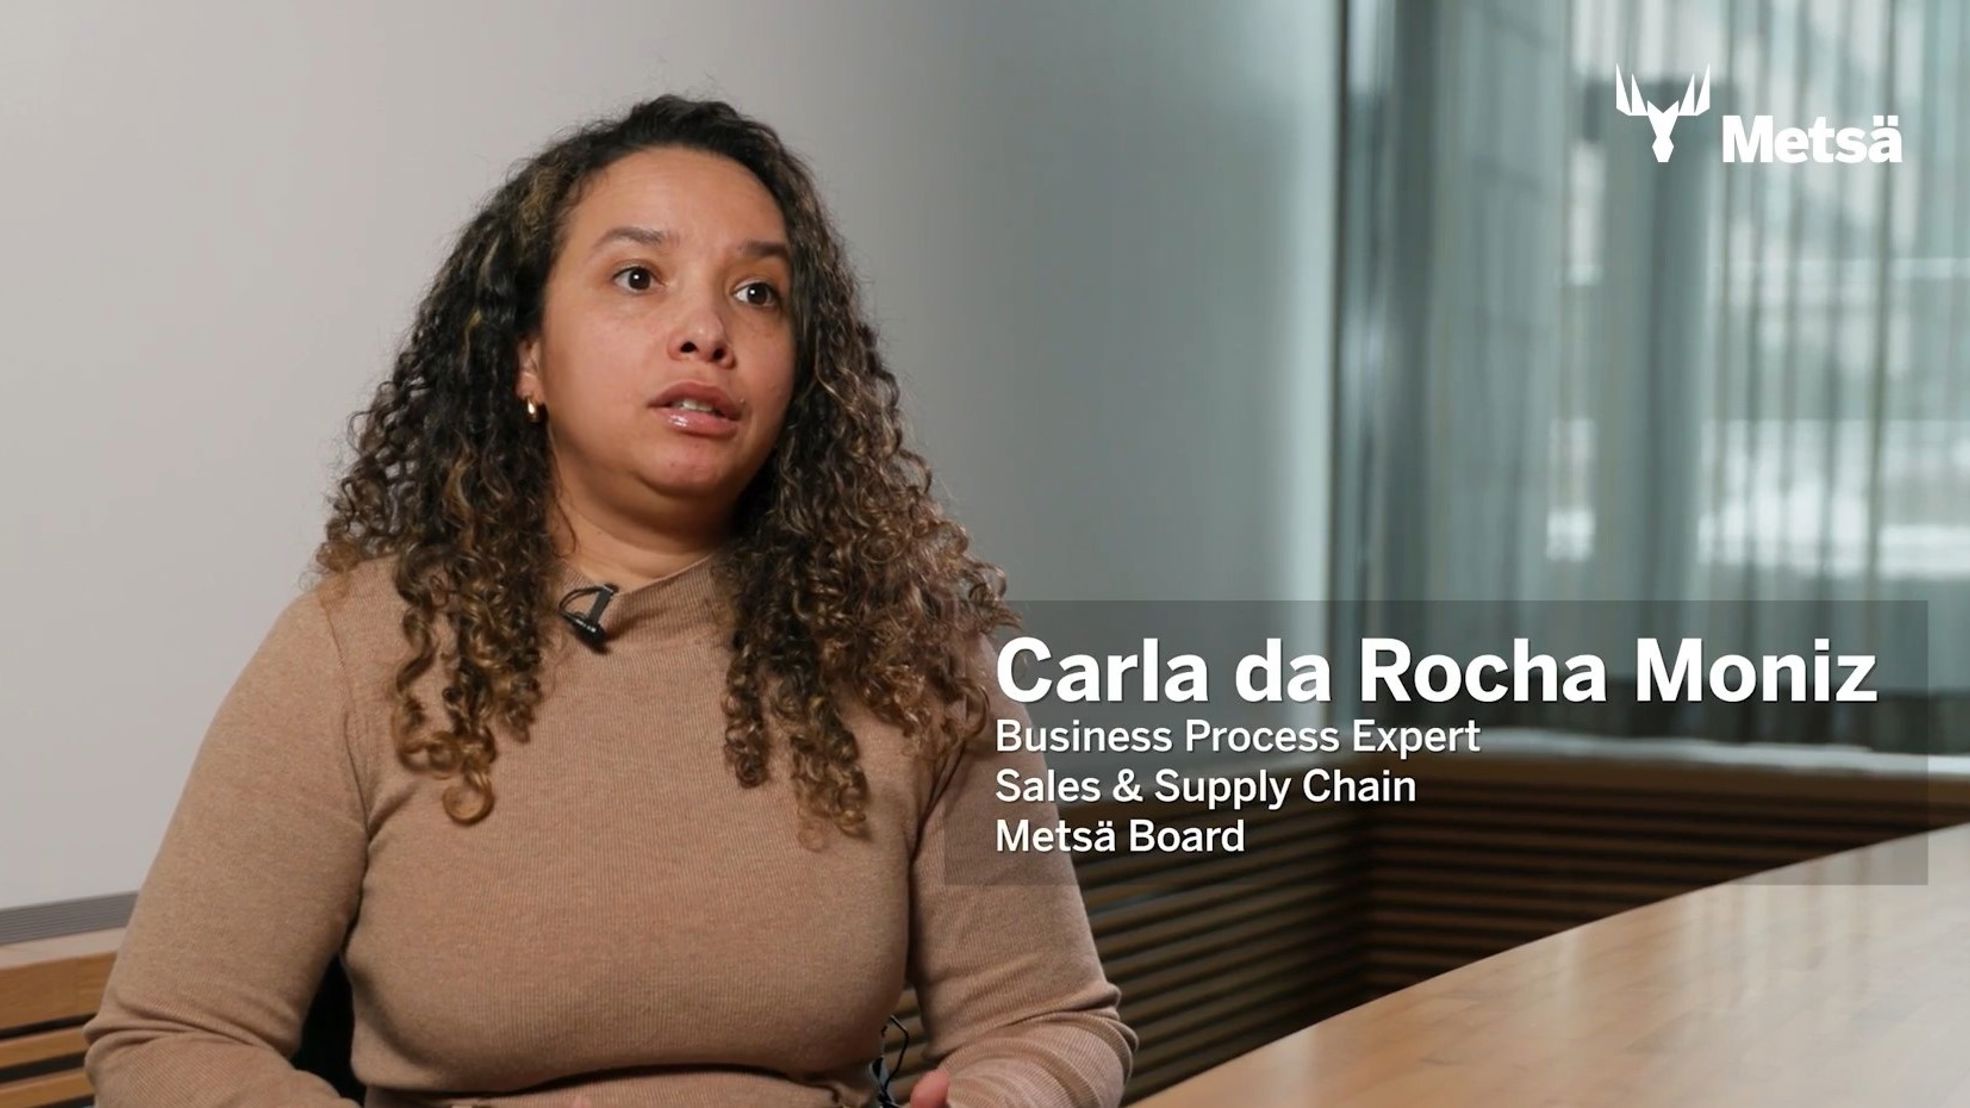 Carla da Rocha Moniz, Business Process Expert